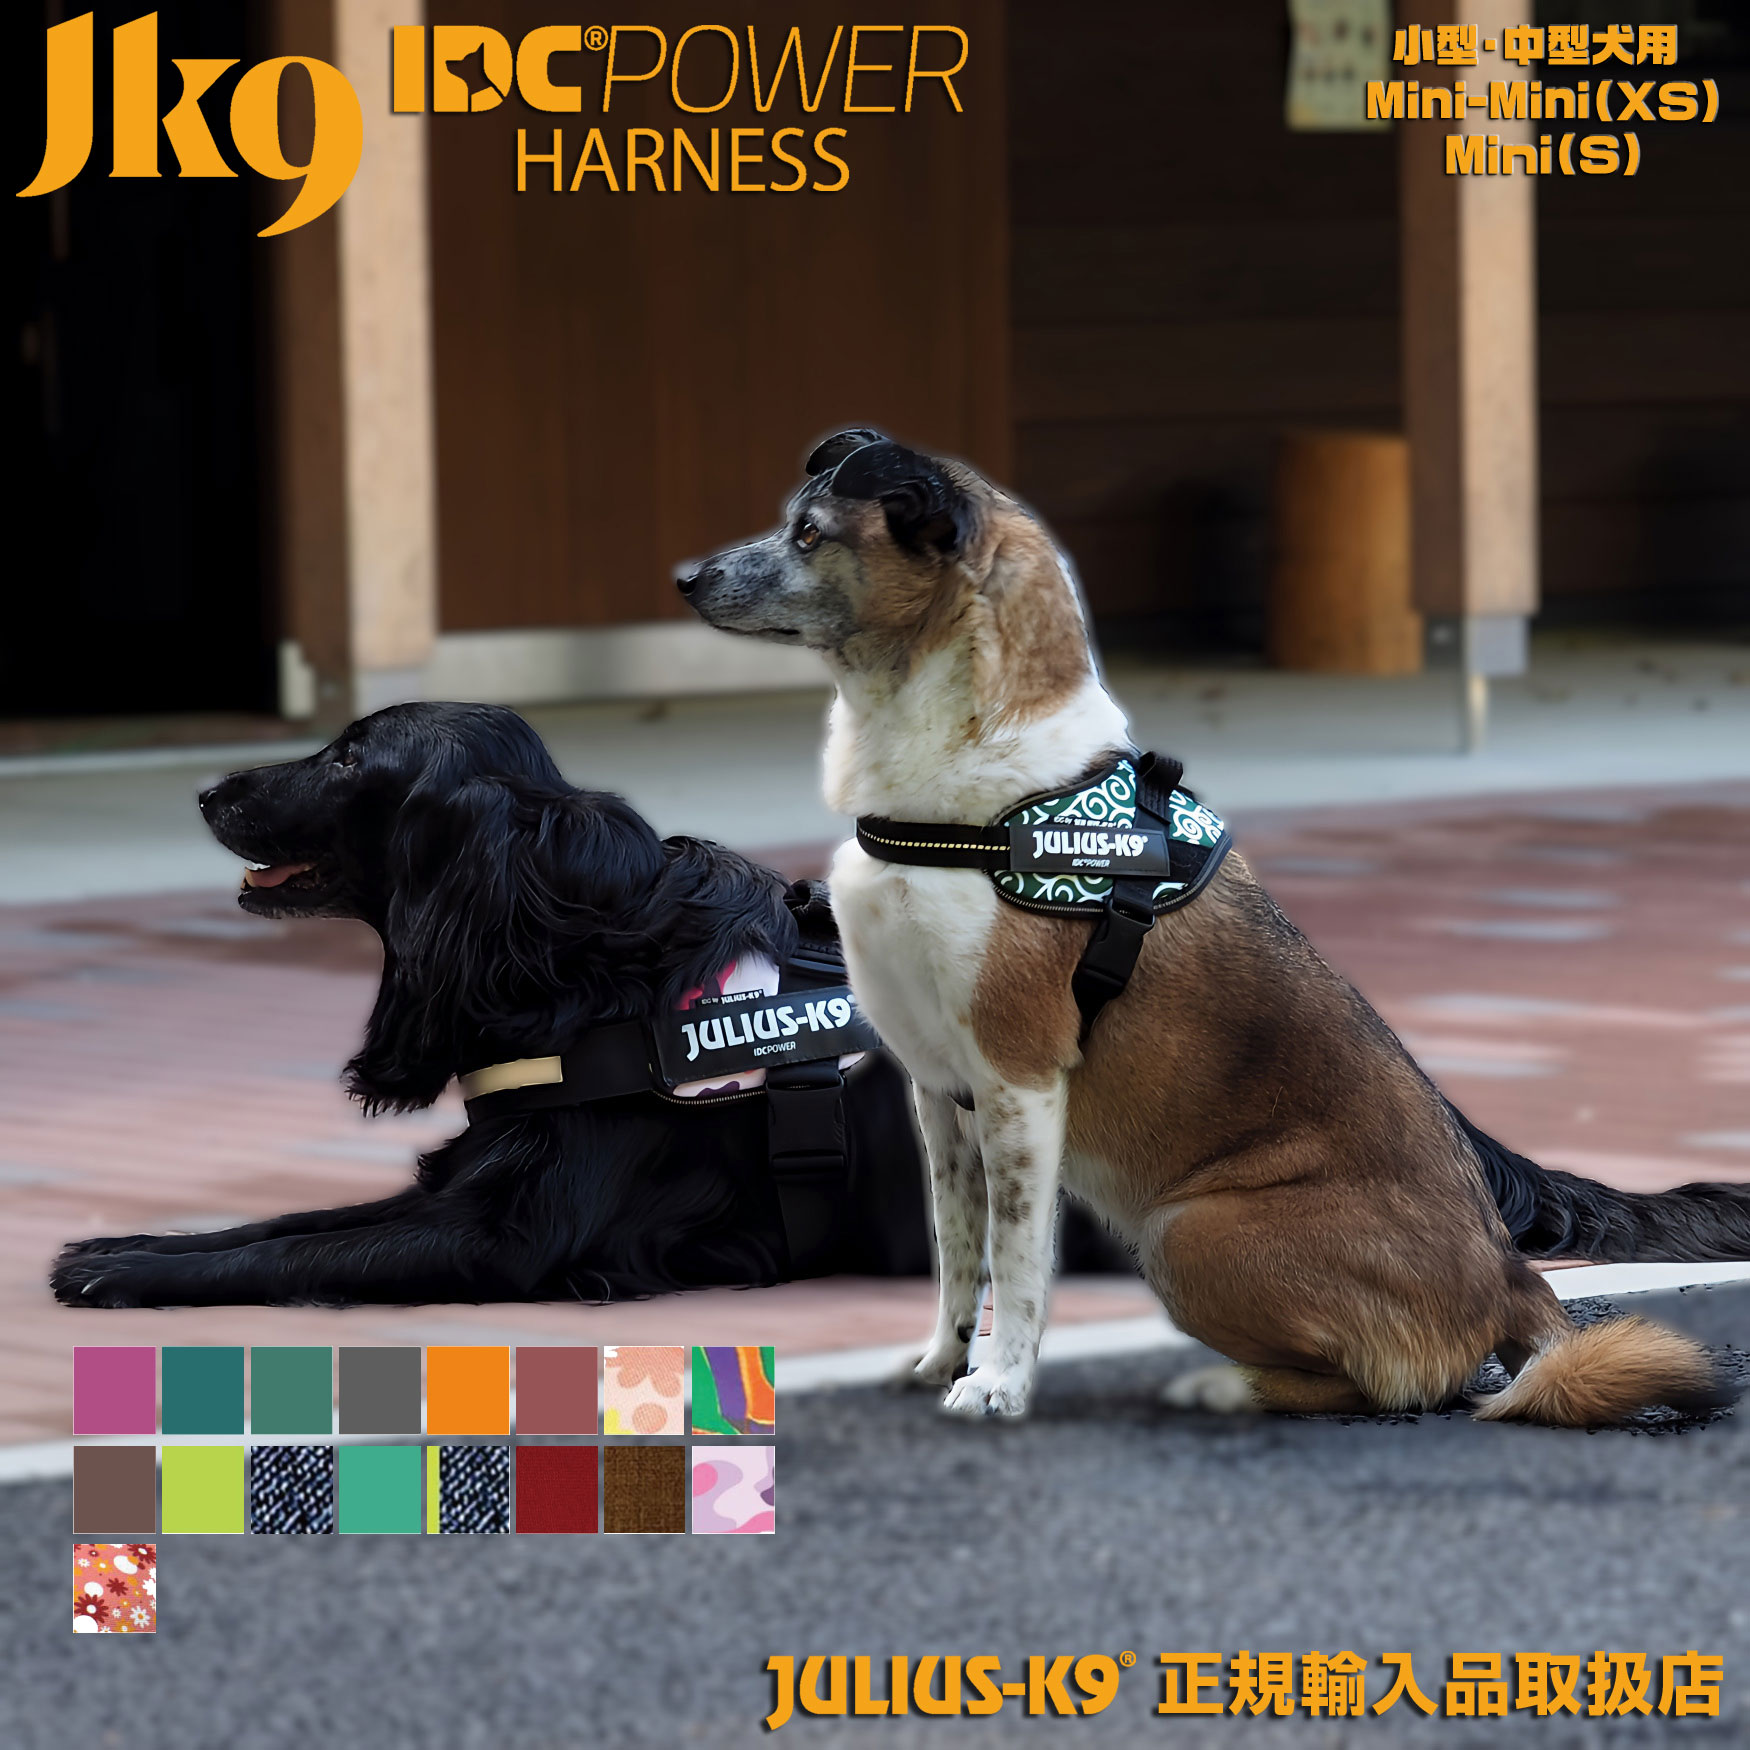 IDCパワーハーネス Mini Mini・Mini 胸囲40-67cm 【カラー：シリーズ2】 Julius-K9 ユリウスケーナイン ハーネス 犬 …